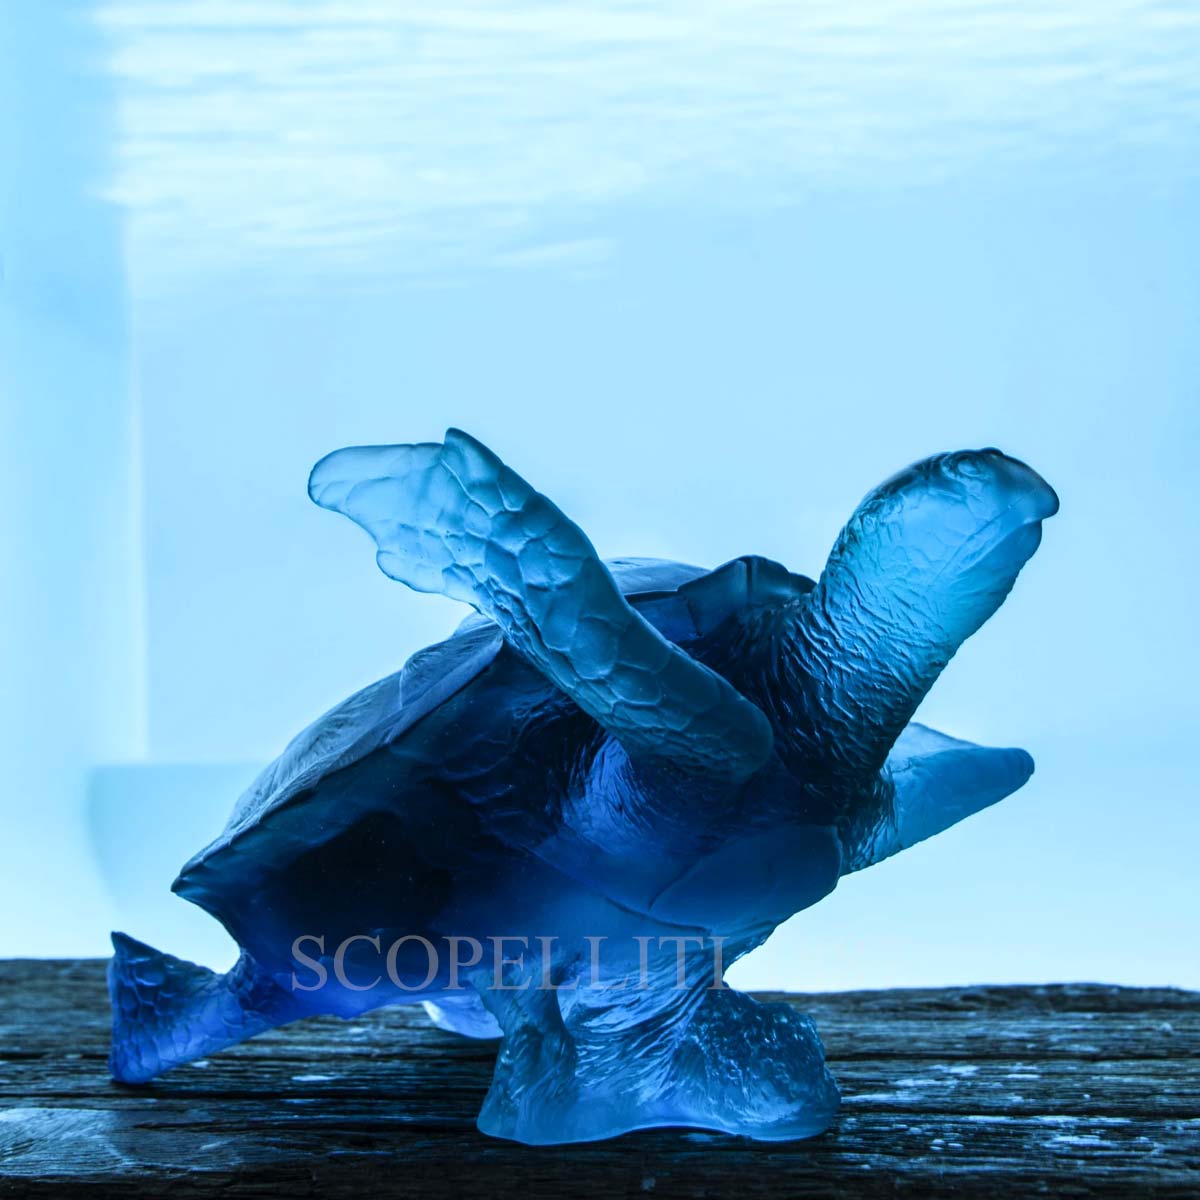 daum mer de corail turtle blue numbered edition